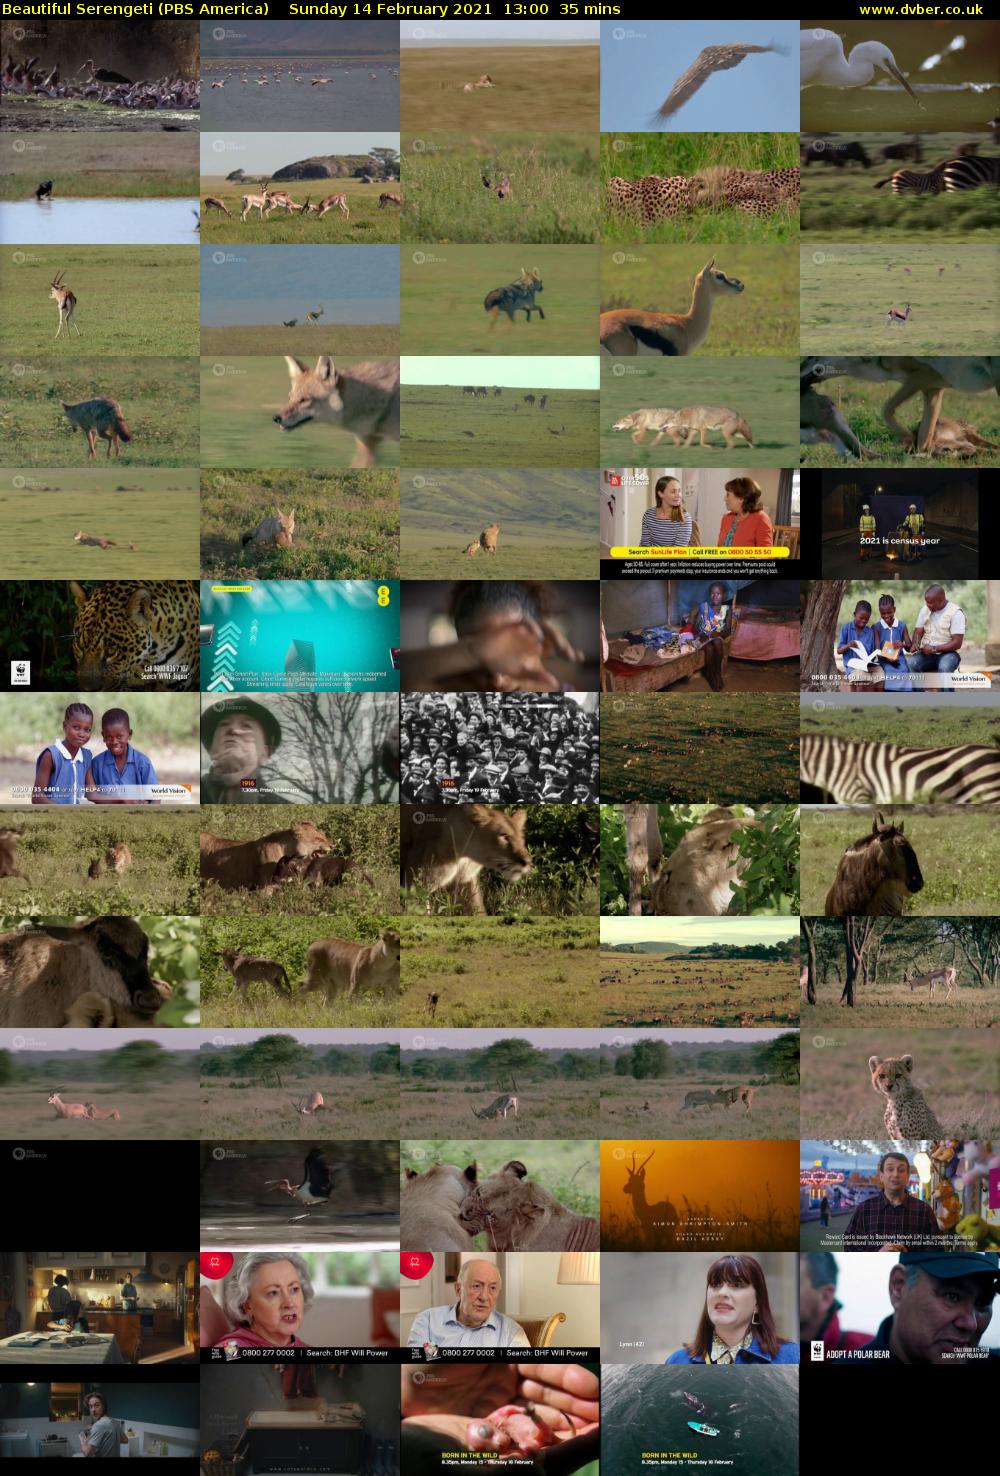 Beautiful Serengeti (PBS America) Sunday 14 February 2021 13:00 - 13:35